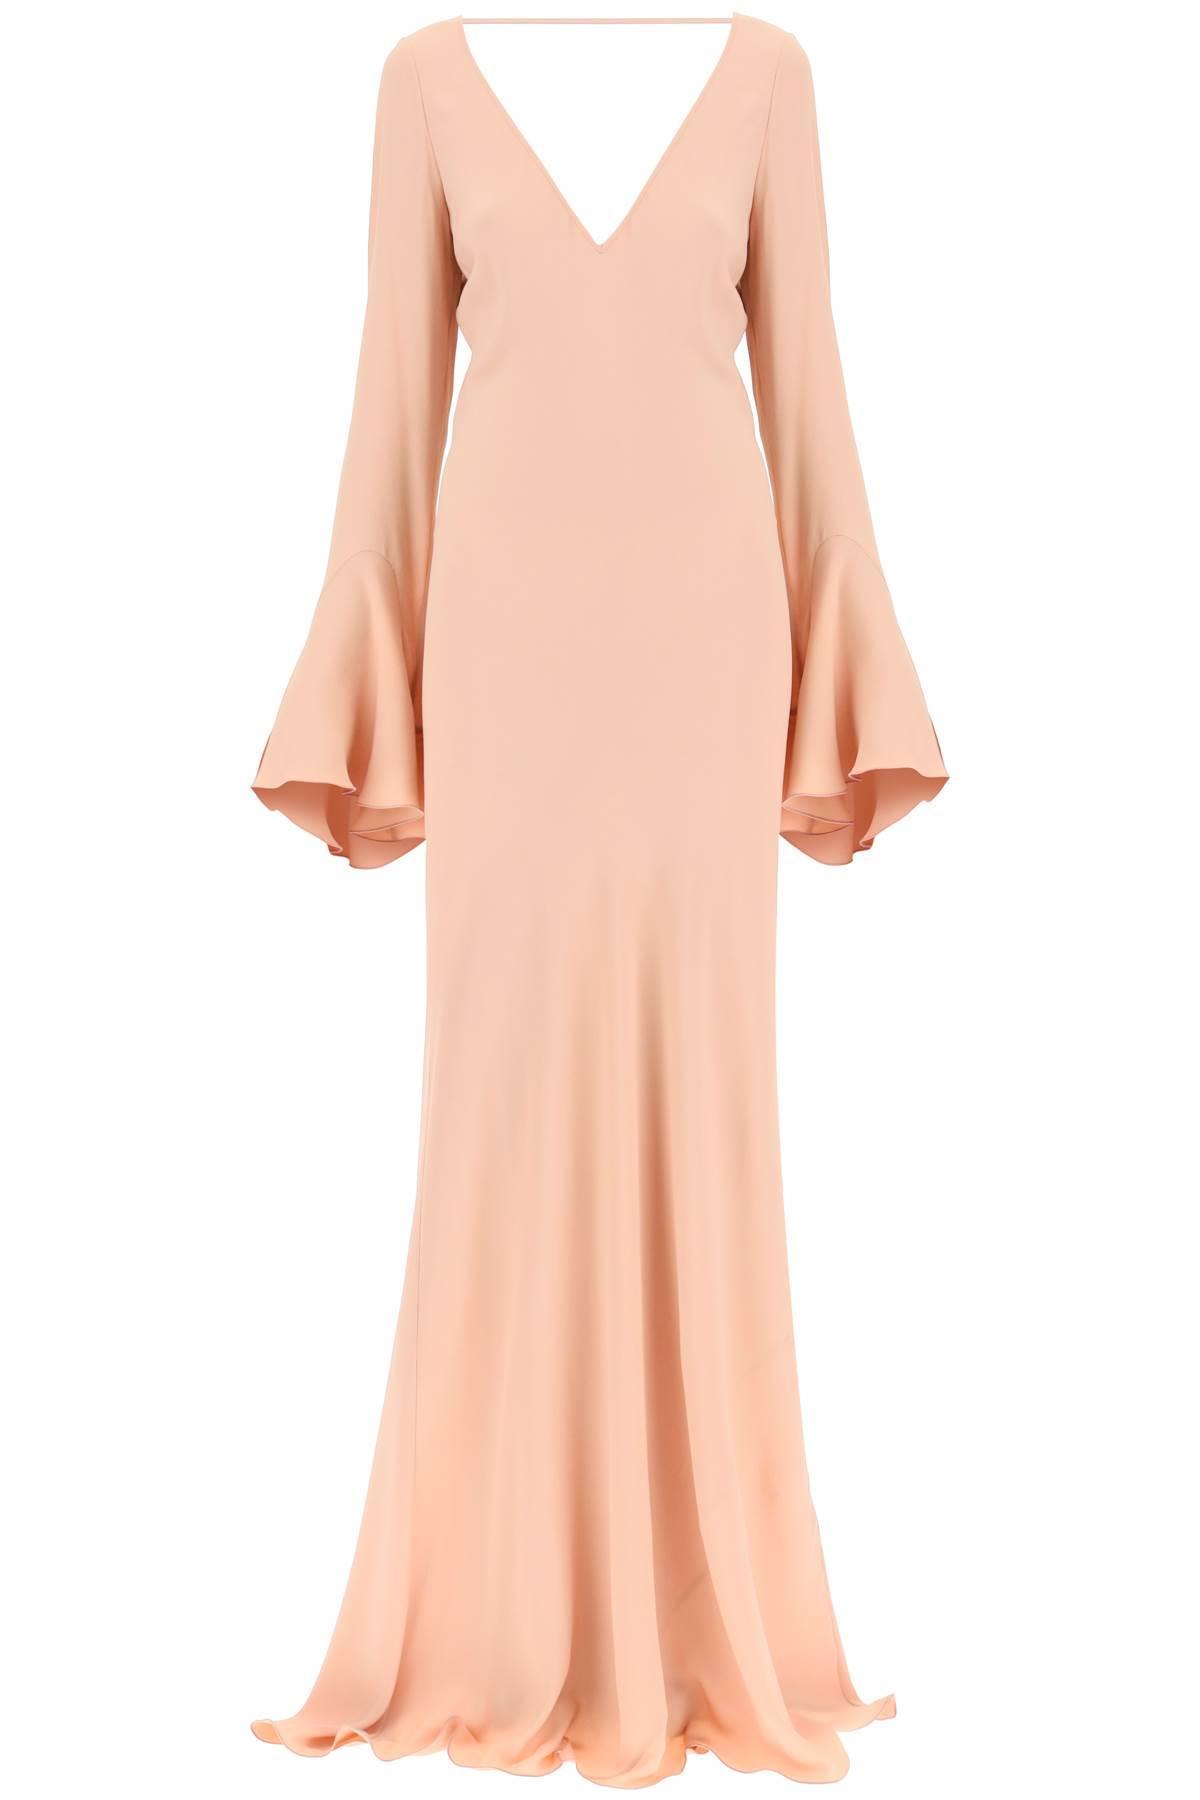 N°21 N.21 Long Dress With Ruffles in Pink | Lyst